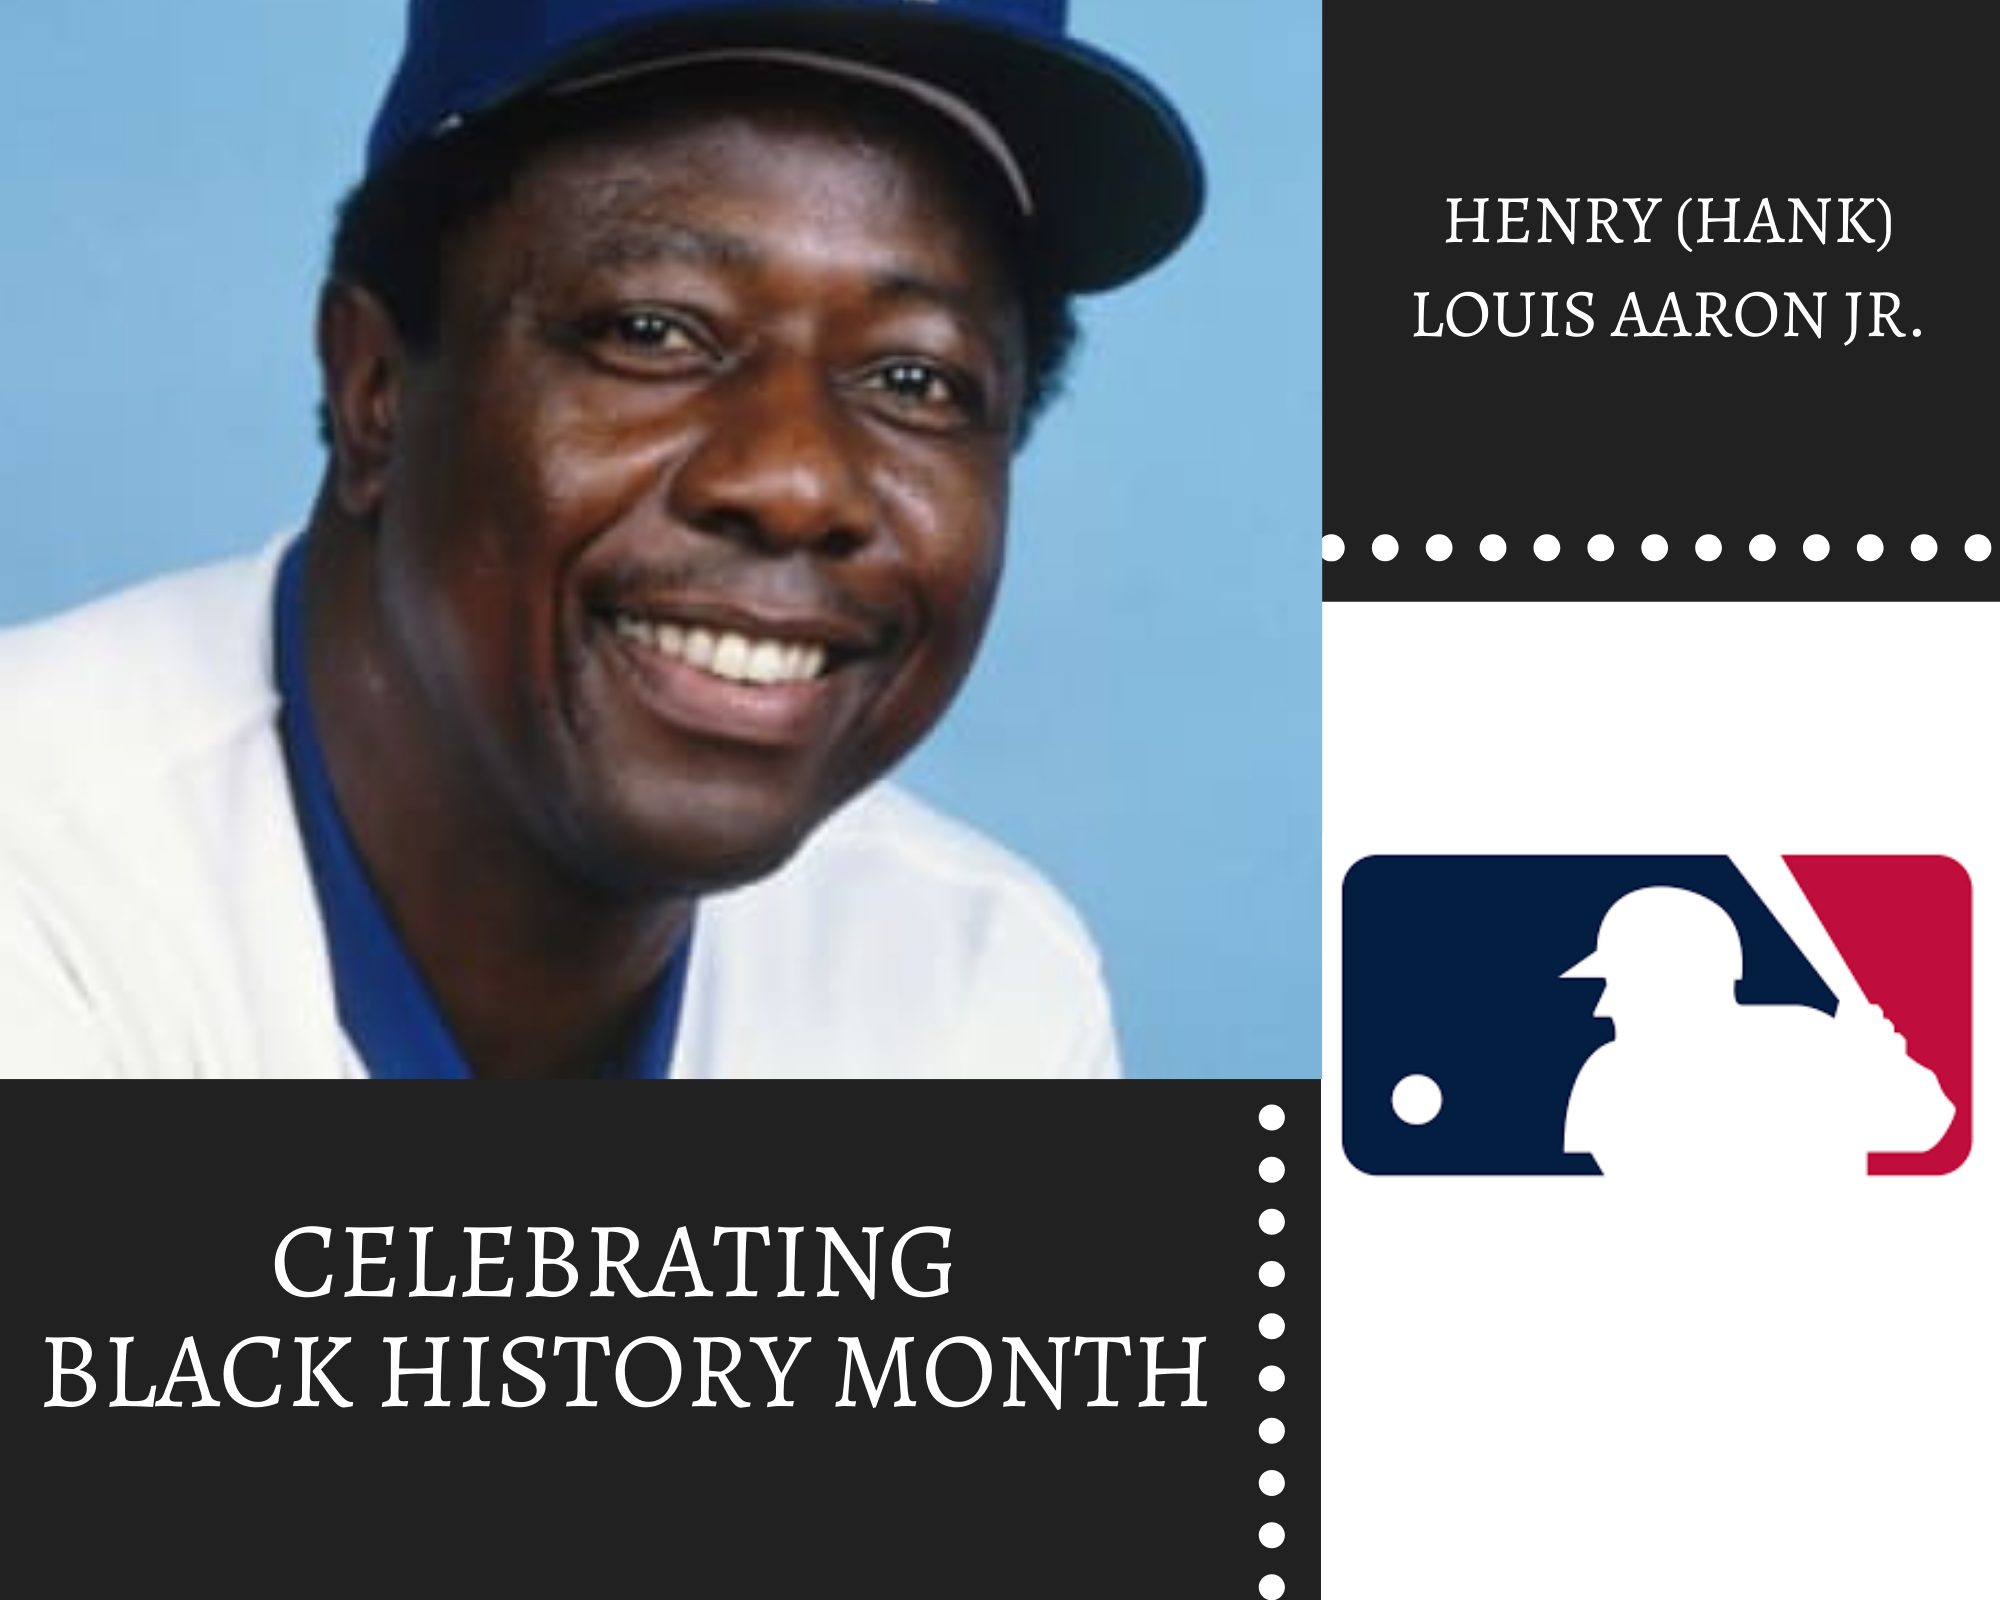 Christian Academy School System | Celebrating Black History Month | Henry (Hank) Louis Aaron Jr.